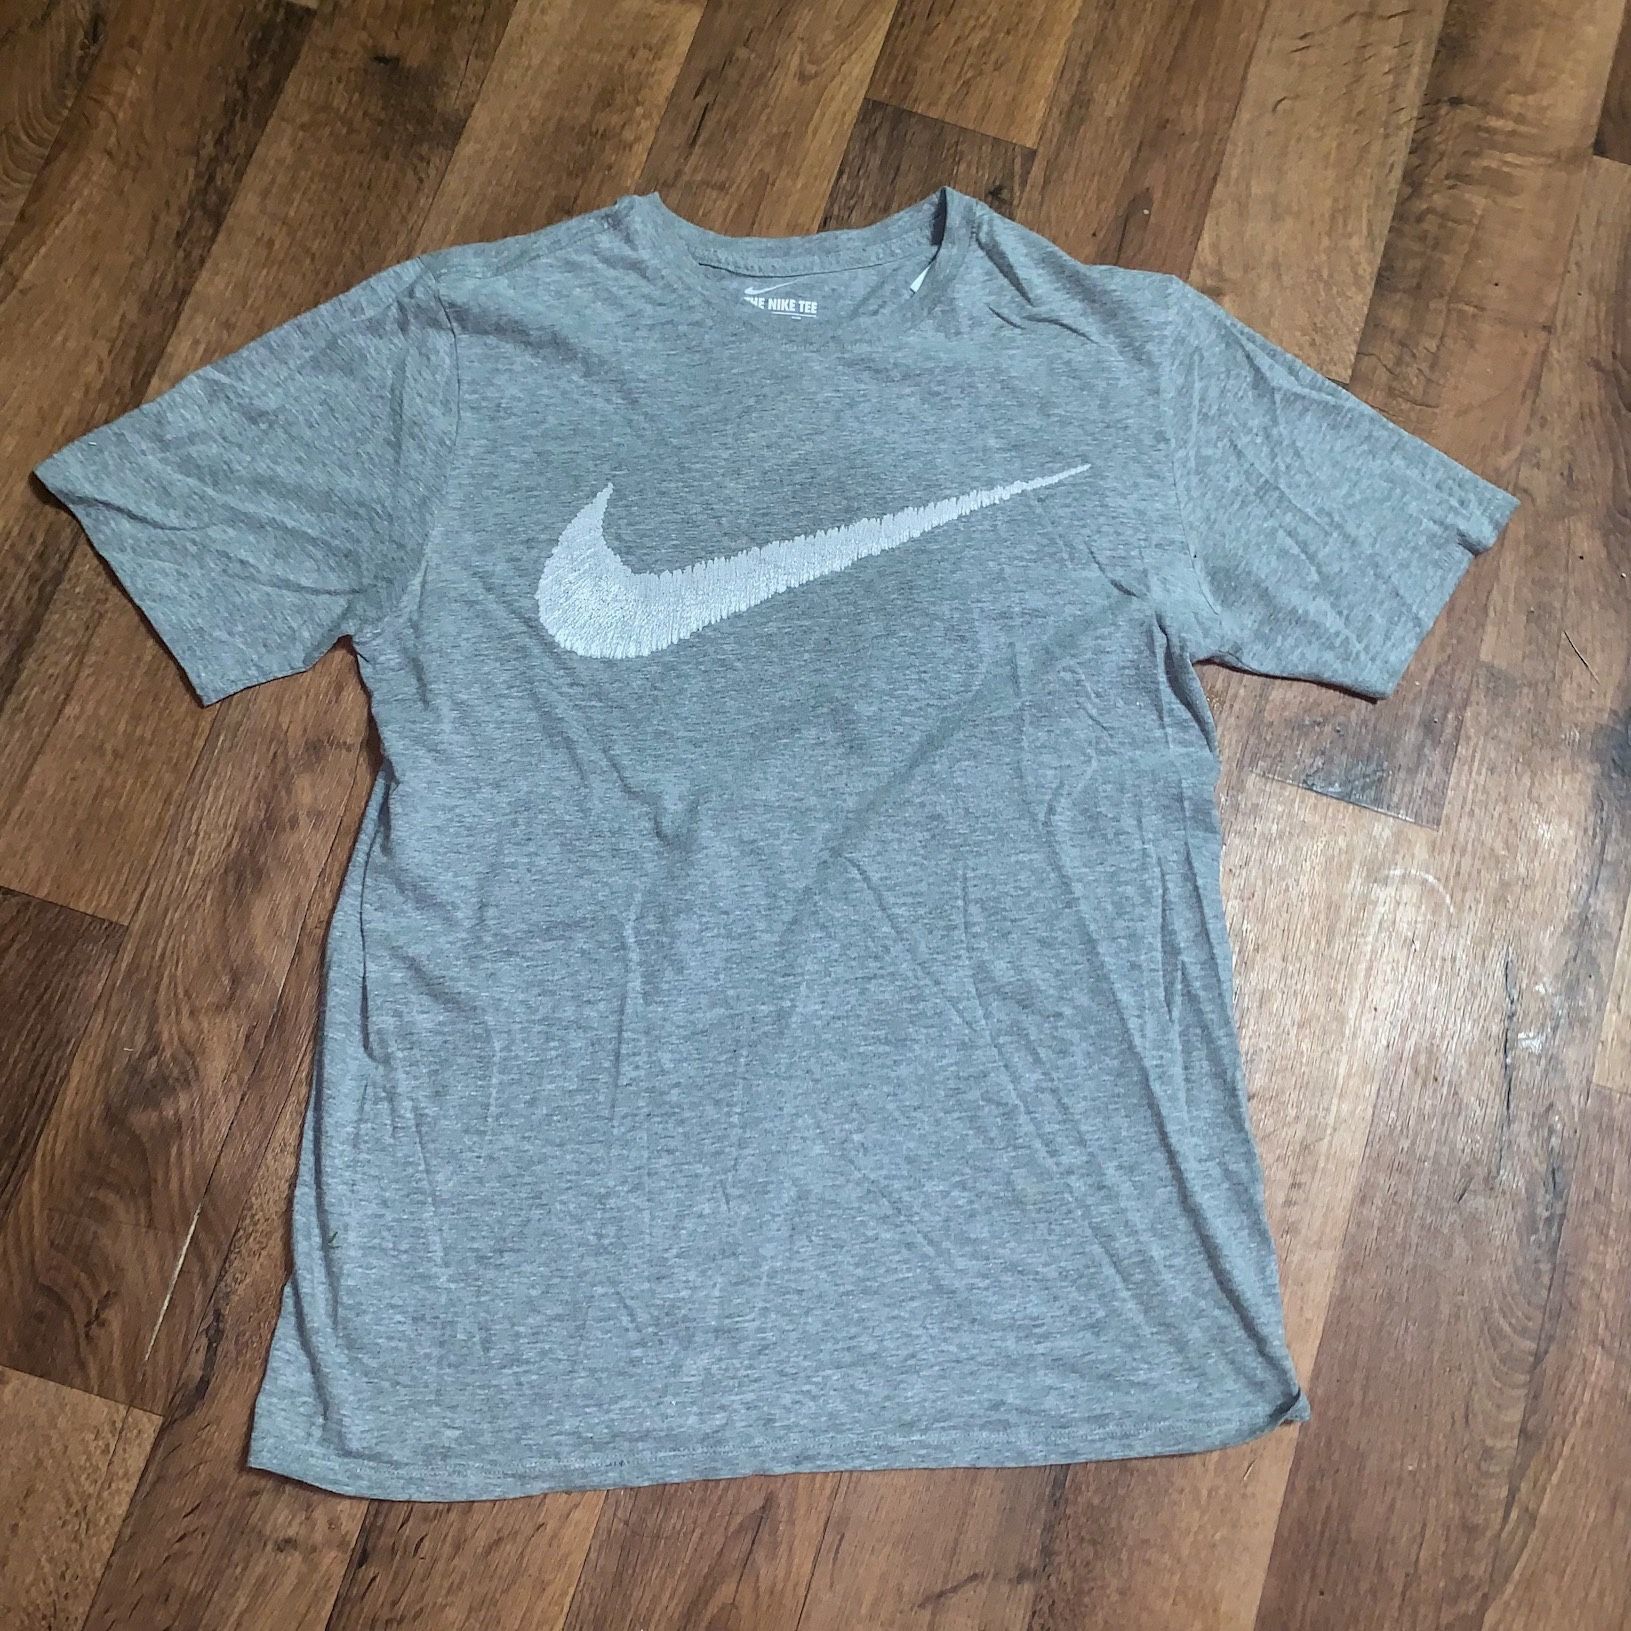 Nike Athletic Cut Men’s Shirt Size Medium 